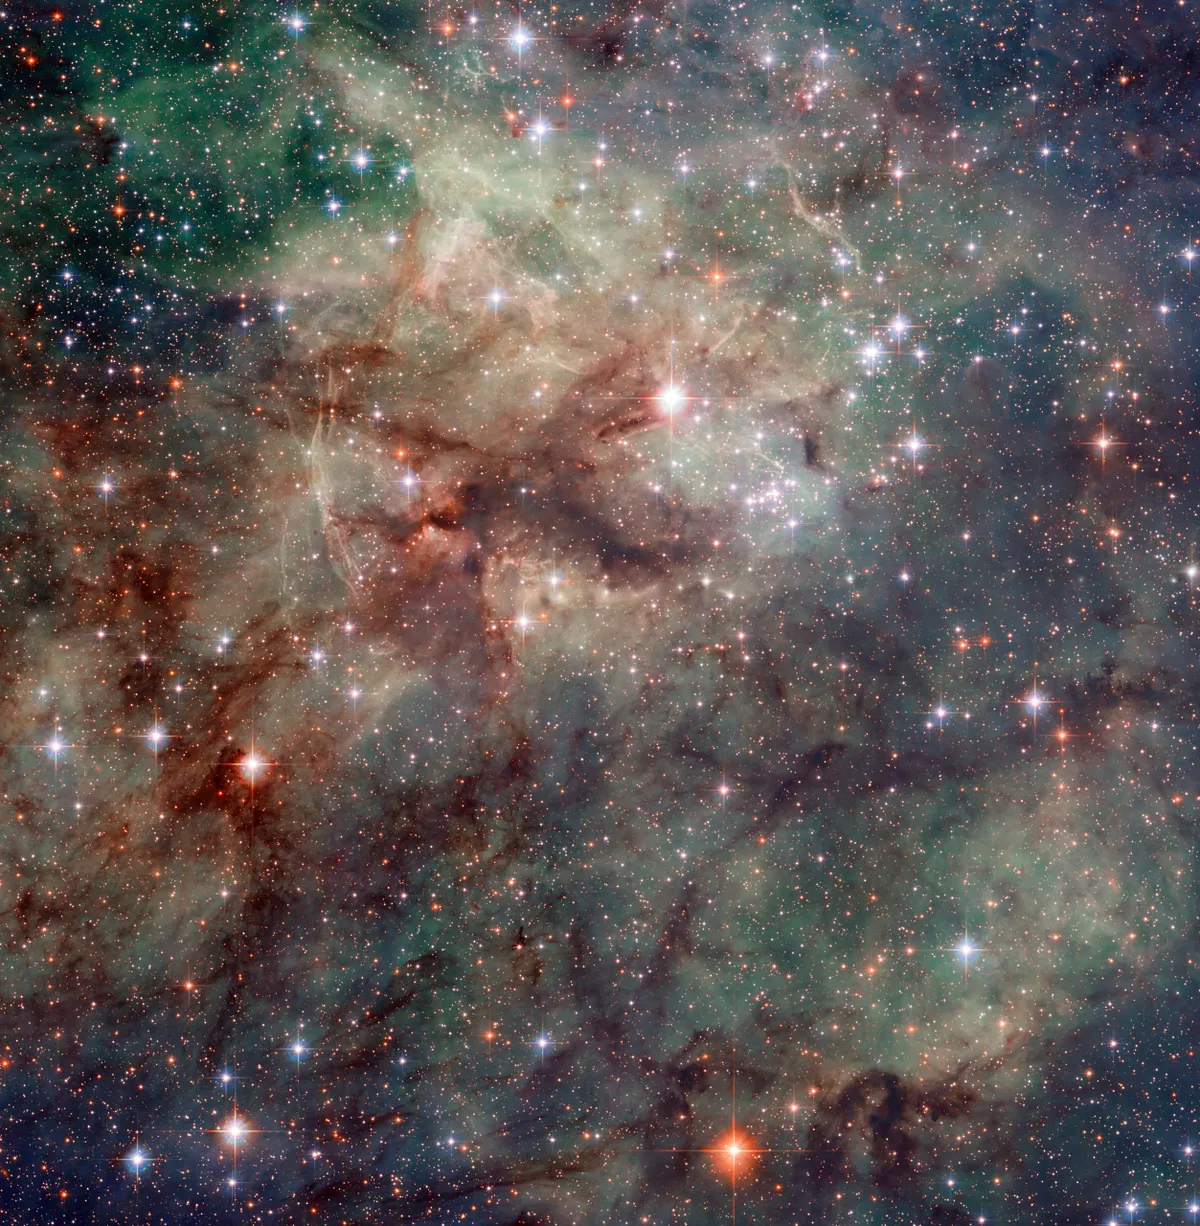 A closeup of the Tarantula Nebula, as seen by the Hubble Space Telescope. Credit: NASA, ESA